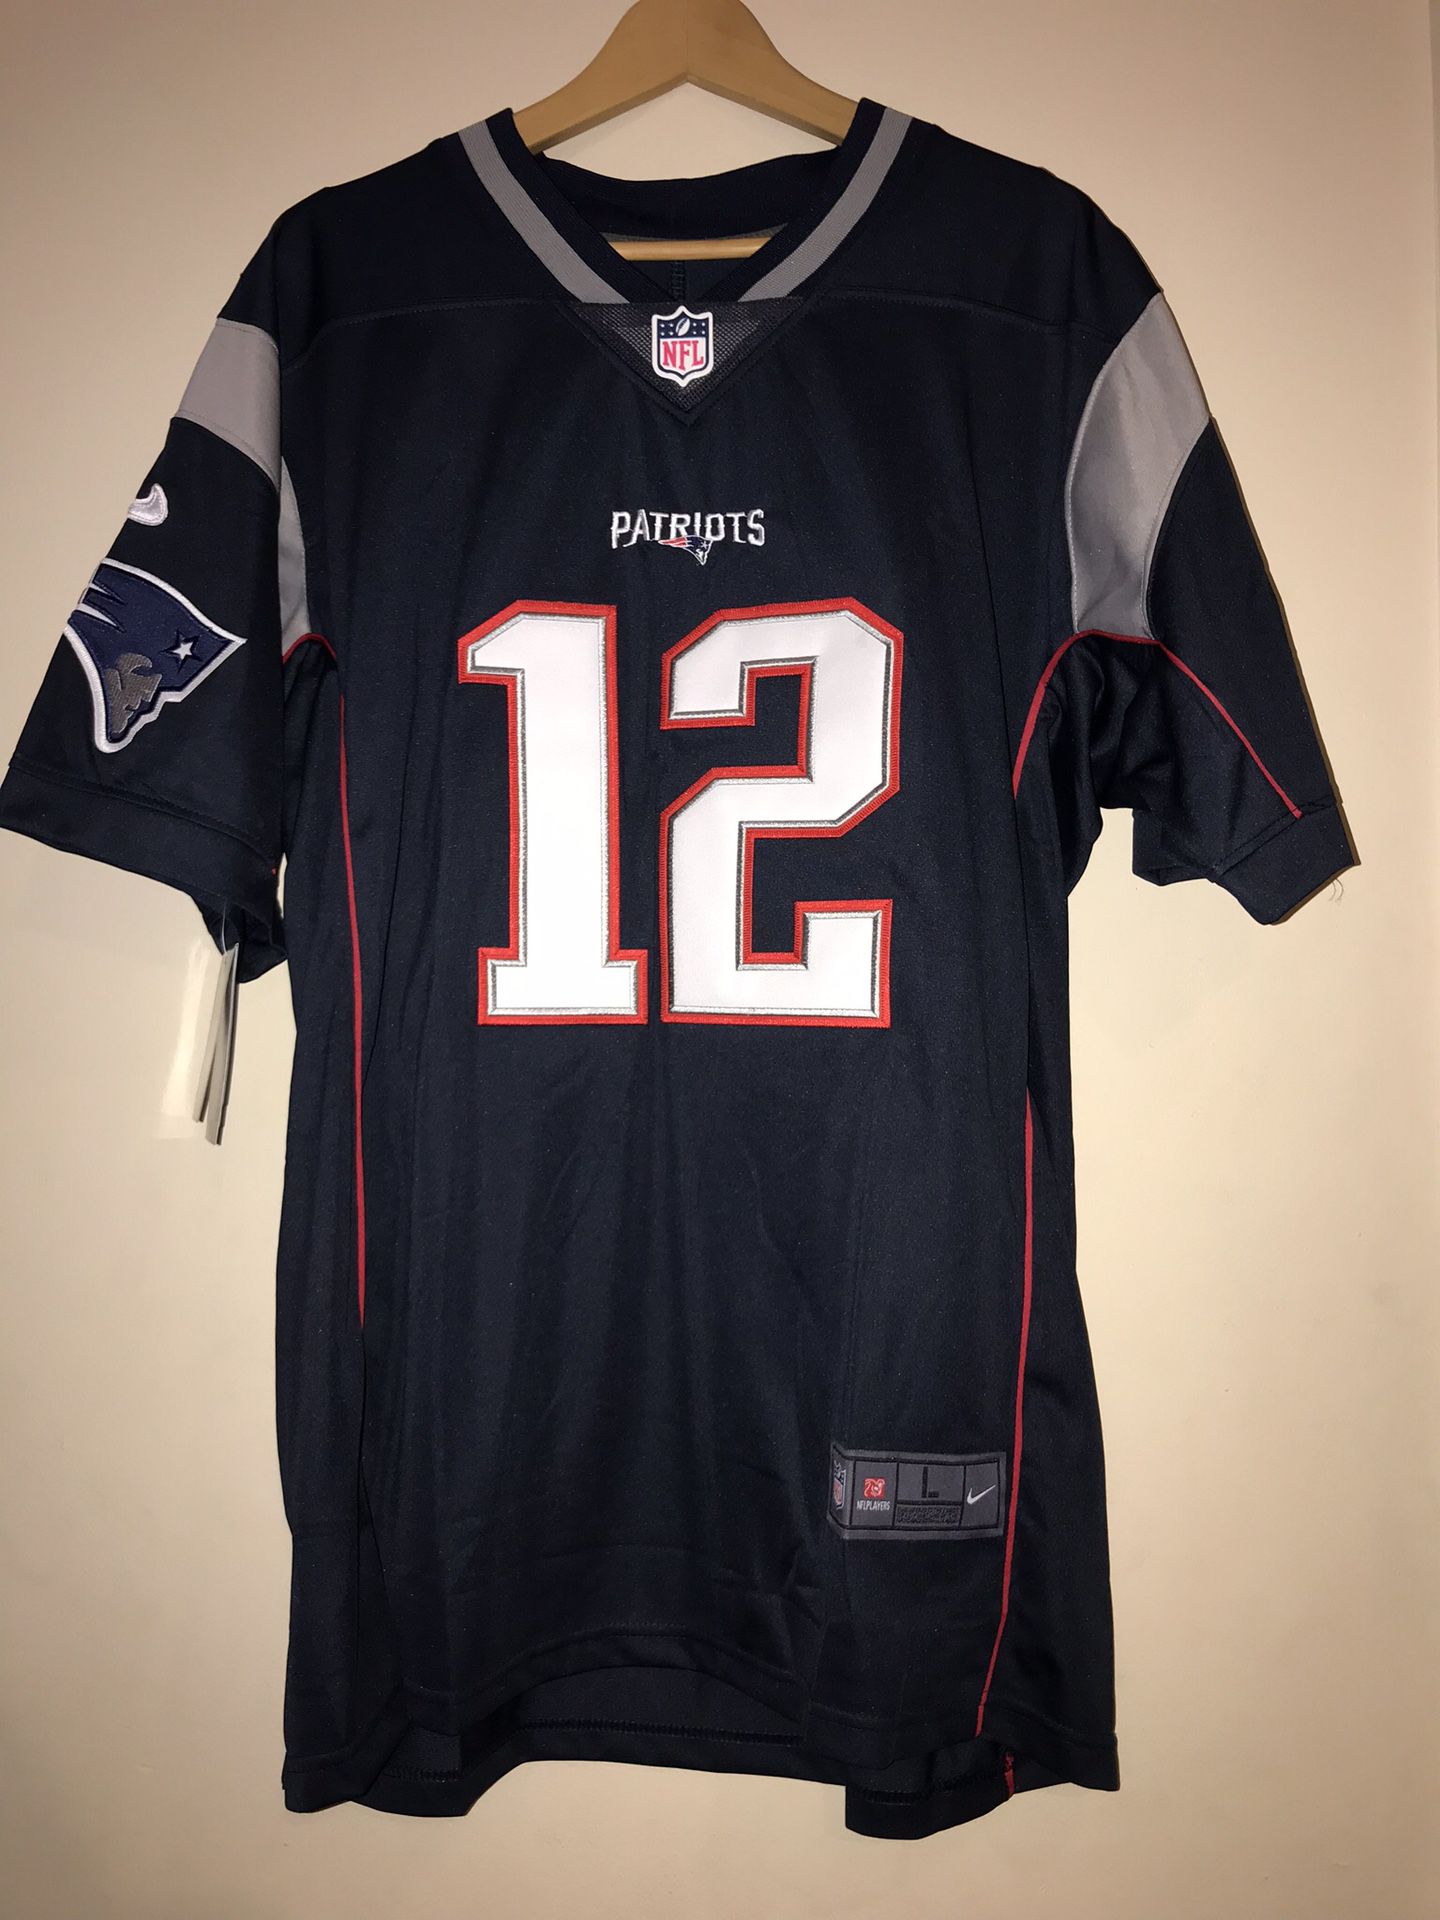 Tom Brady Jersey 12 for the New England Patriots